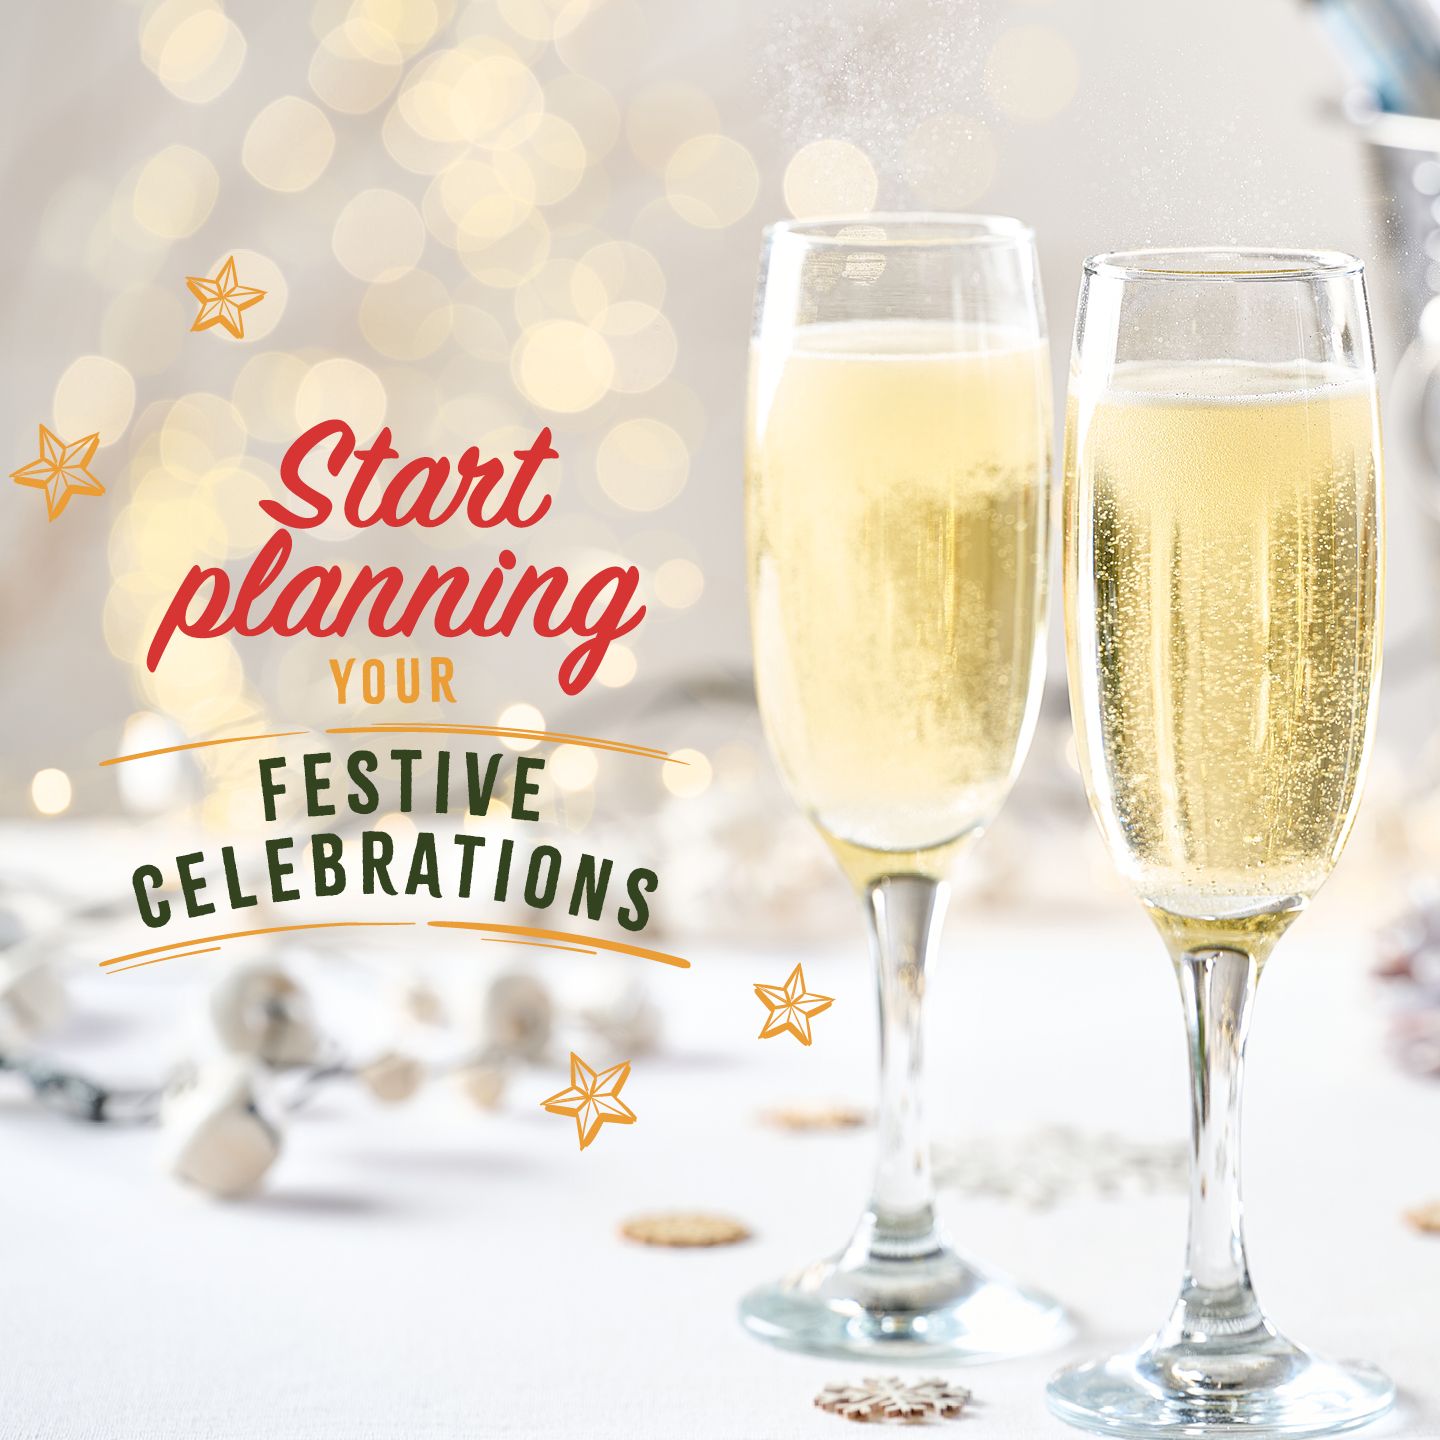 Plan Your Festive Get-Togethers